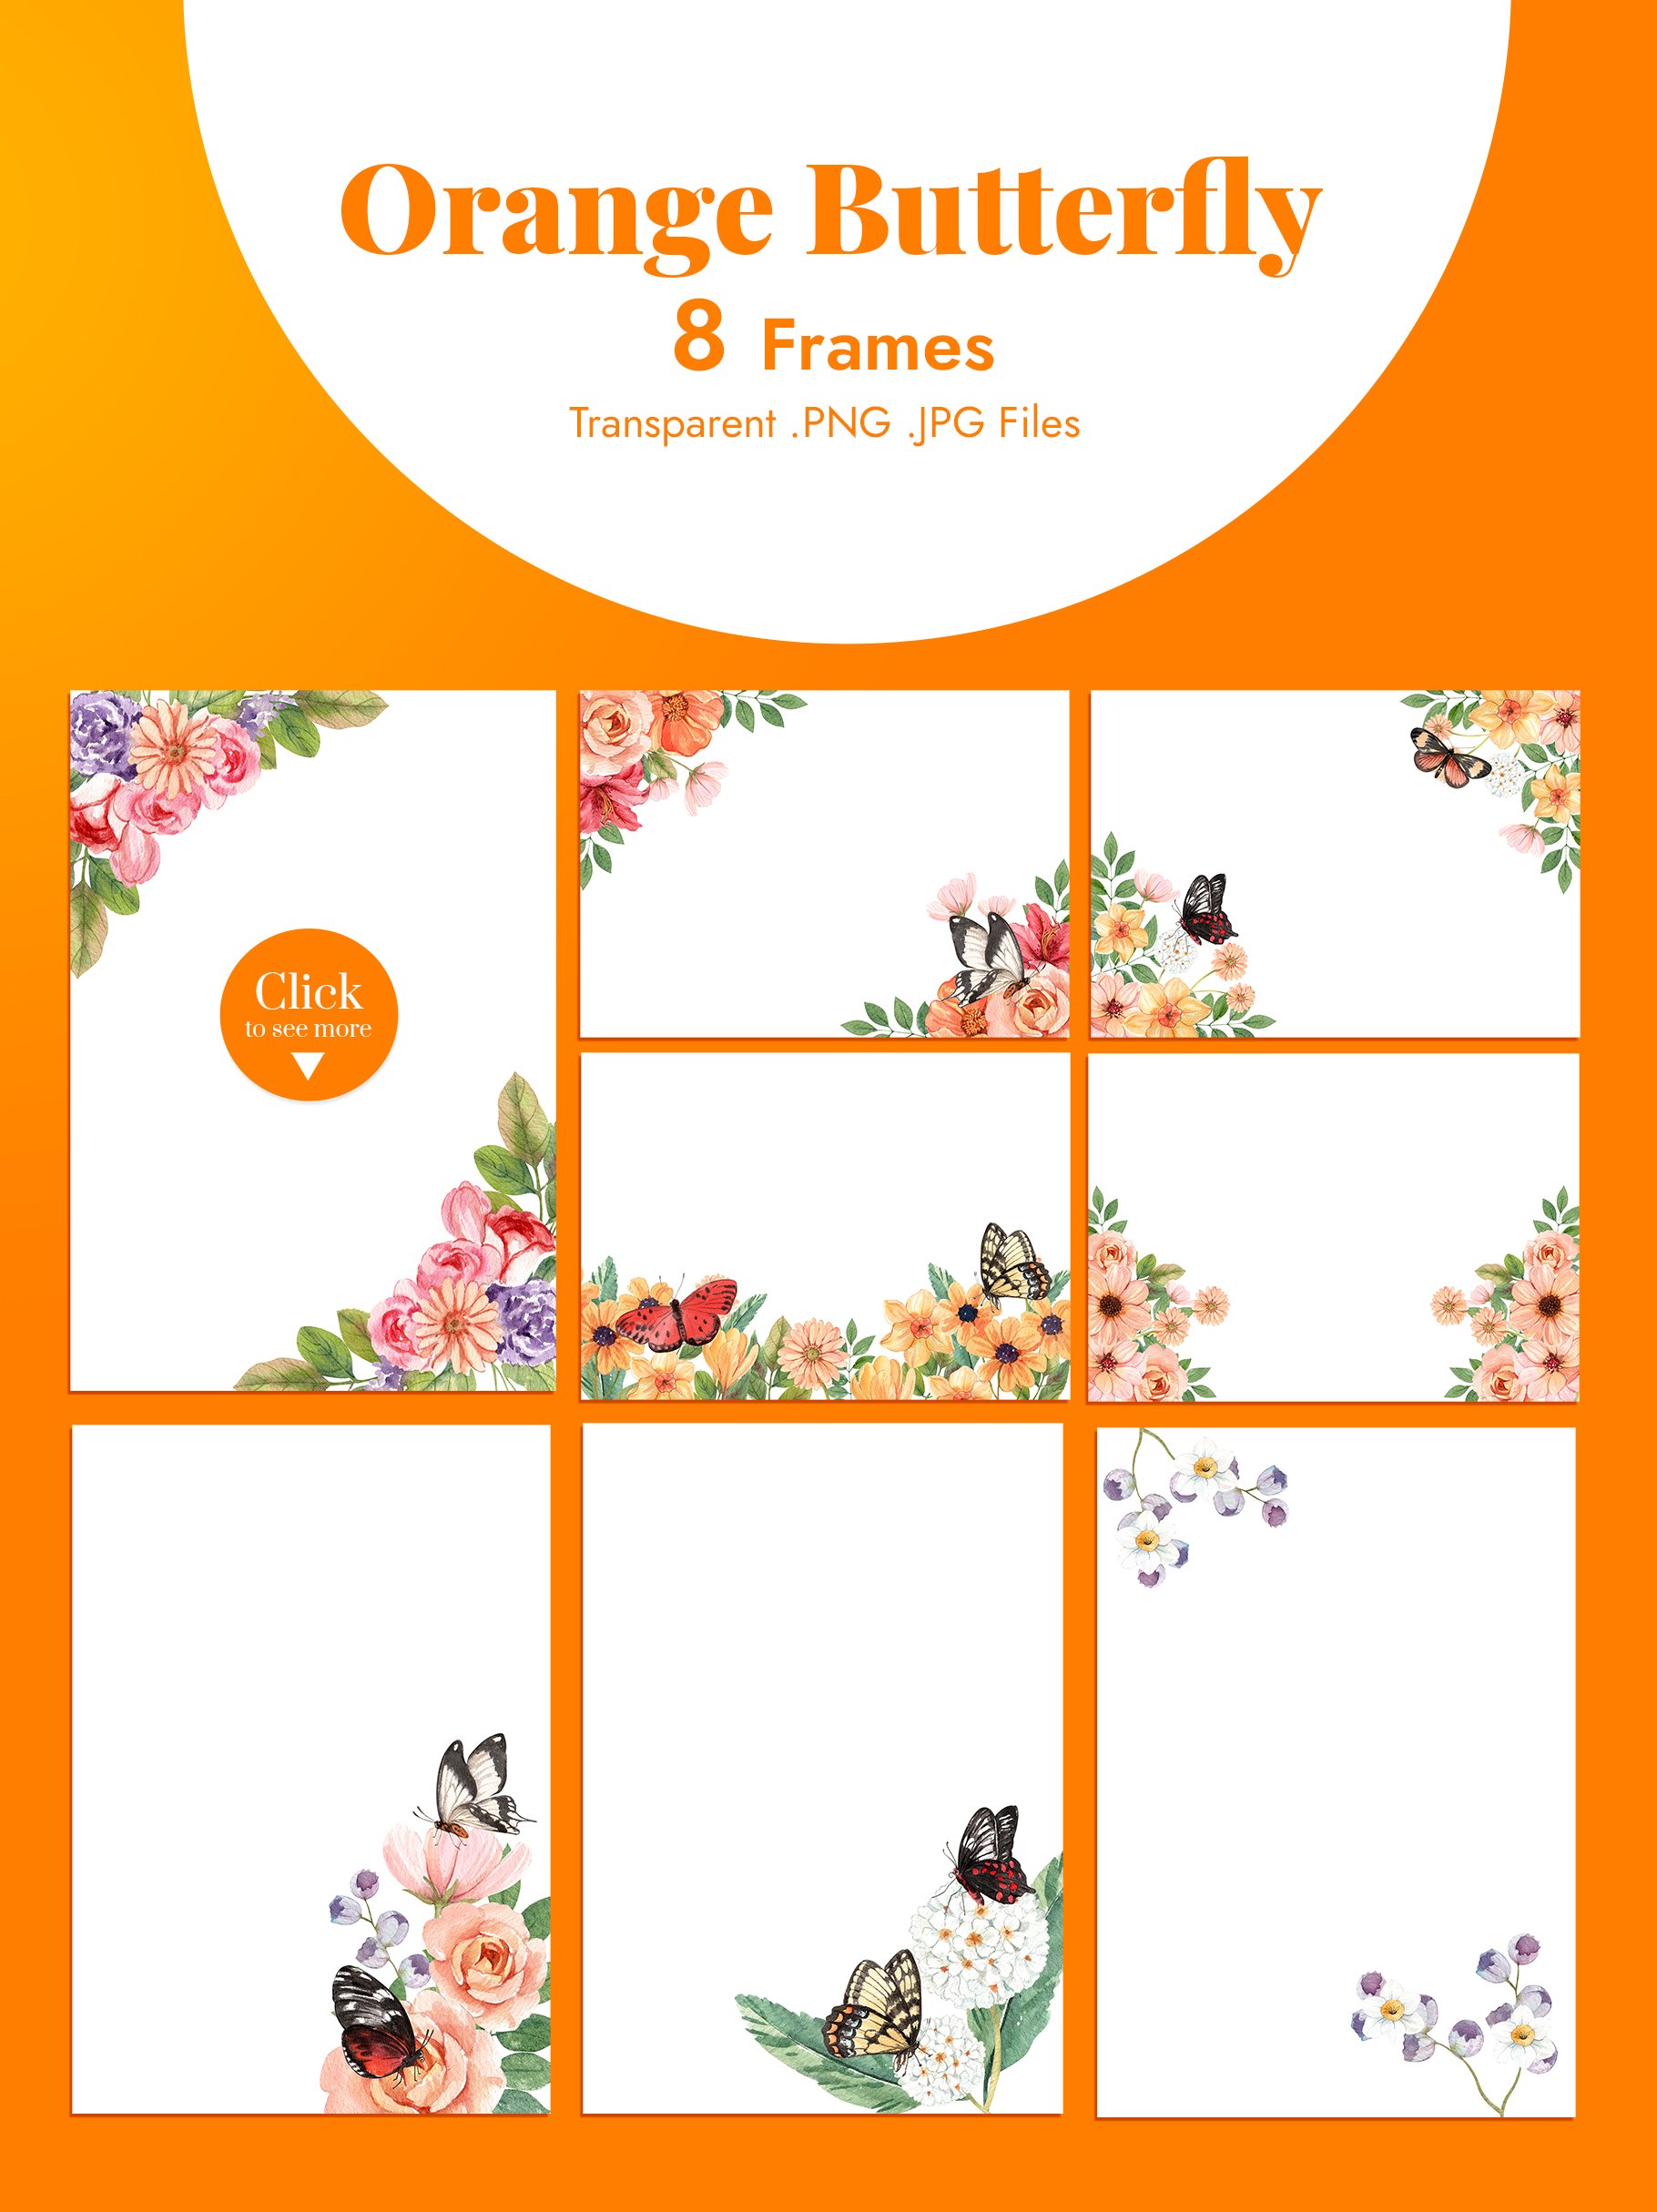 Orange butterfly presentation frames for photo.